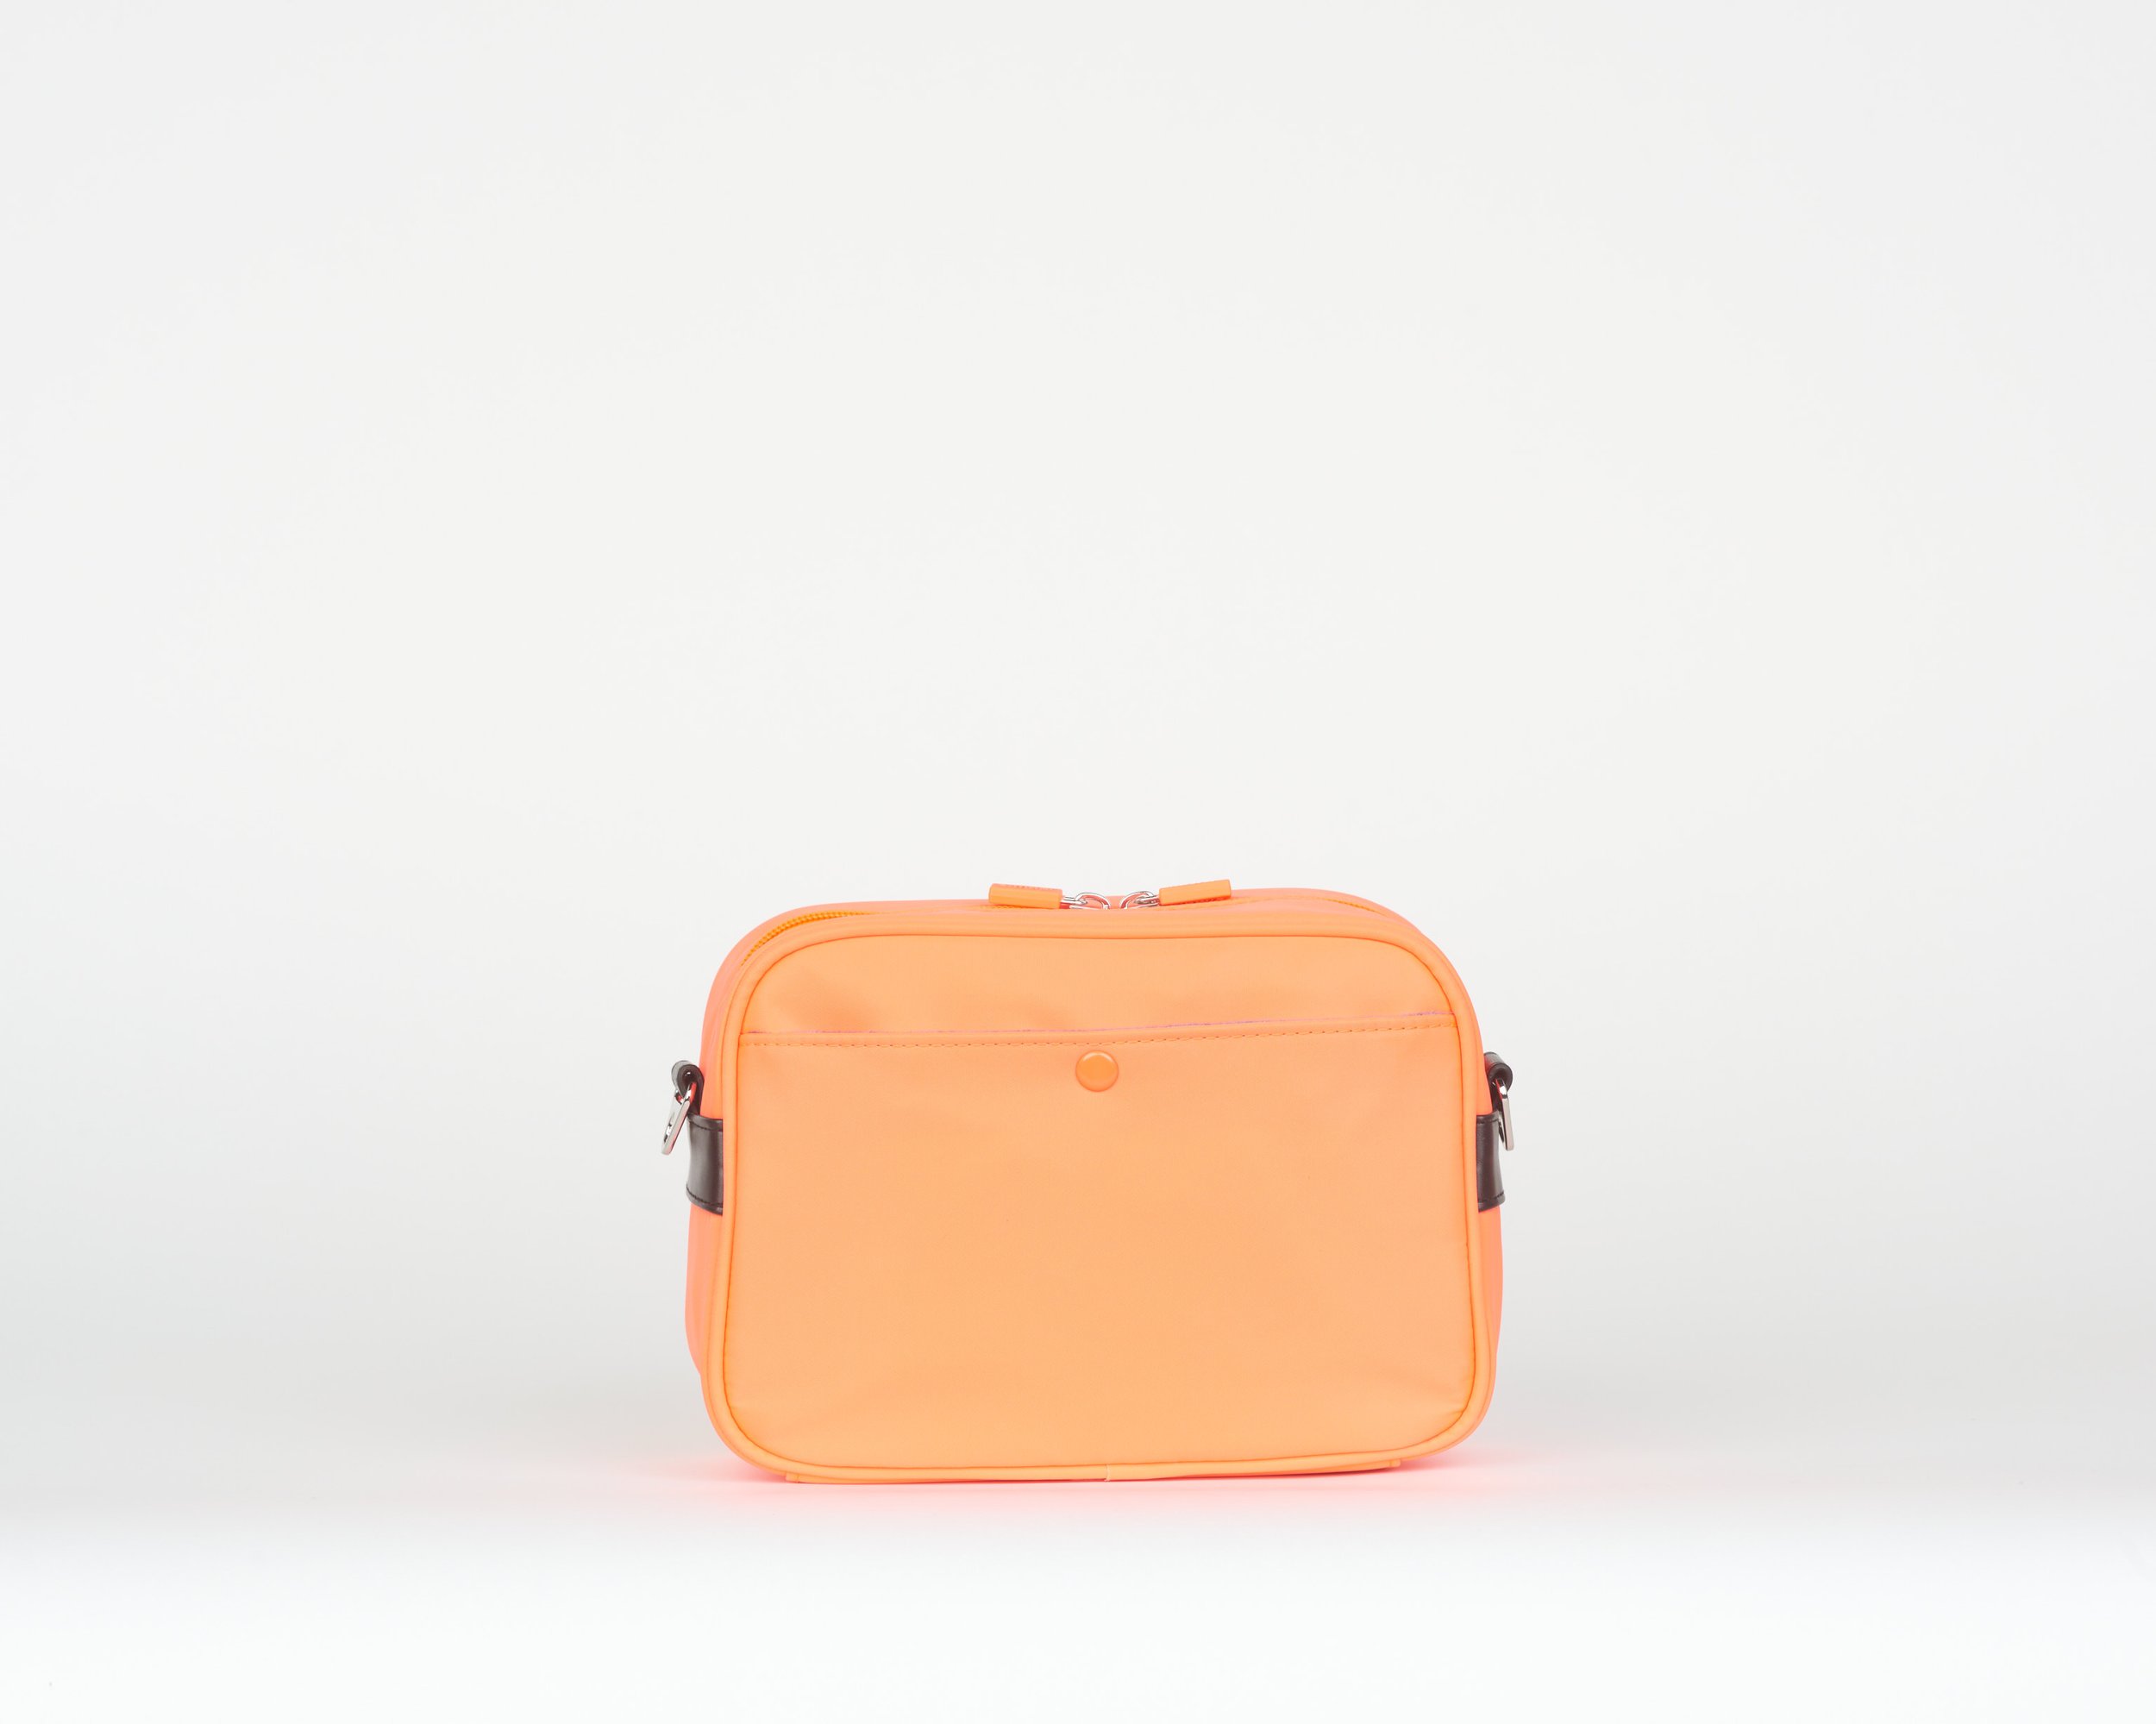 Feminine Handbag For Shopping, Travel, Vacation. Leather Bag With Handle